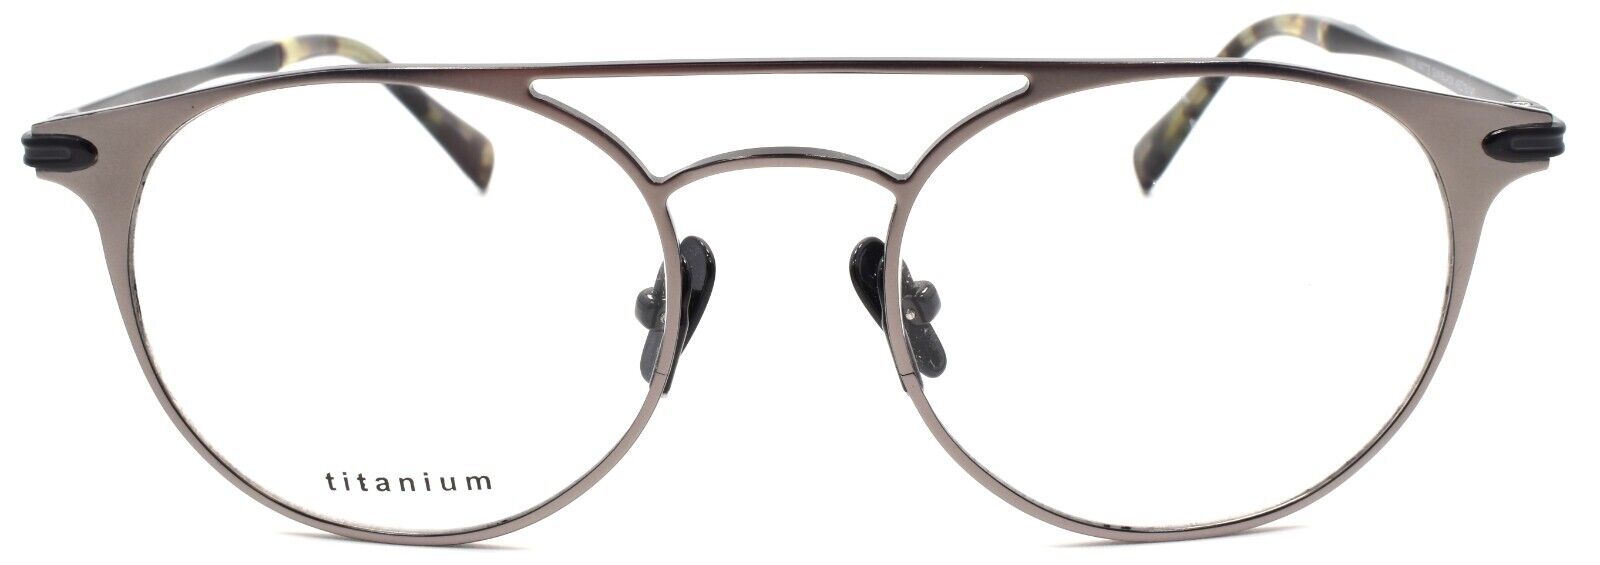 2-John Varvatos V169 Men's Eyeglasses Aviator Titanium 49-18-145 Gunmetal Japan-751286317473-IKSpecs